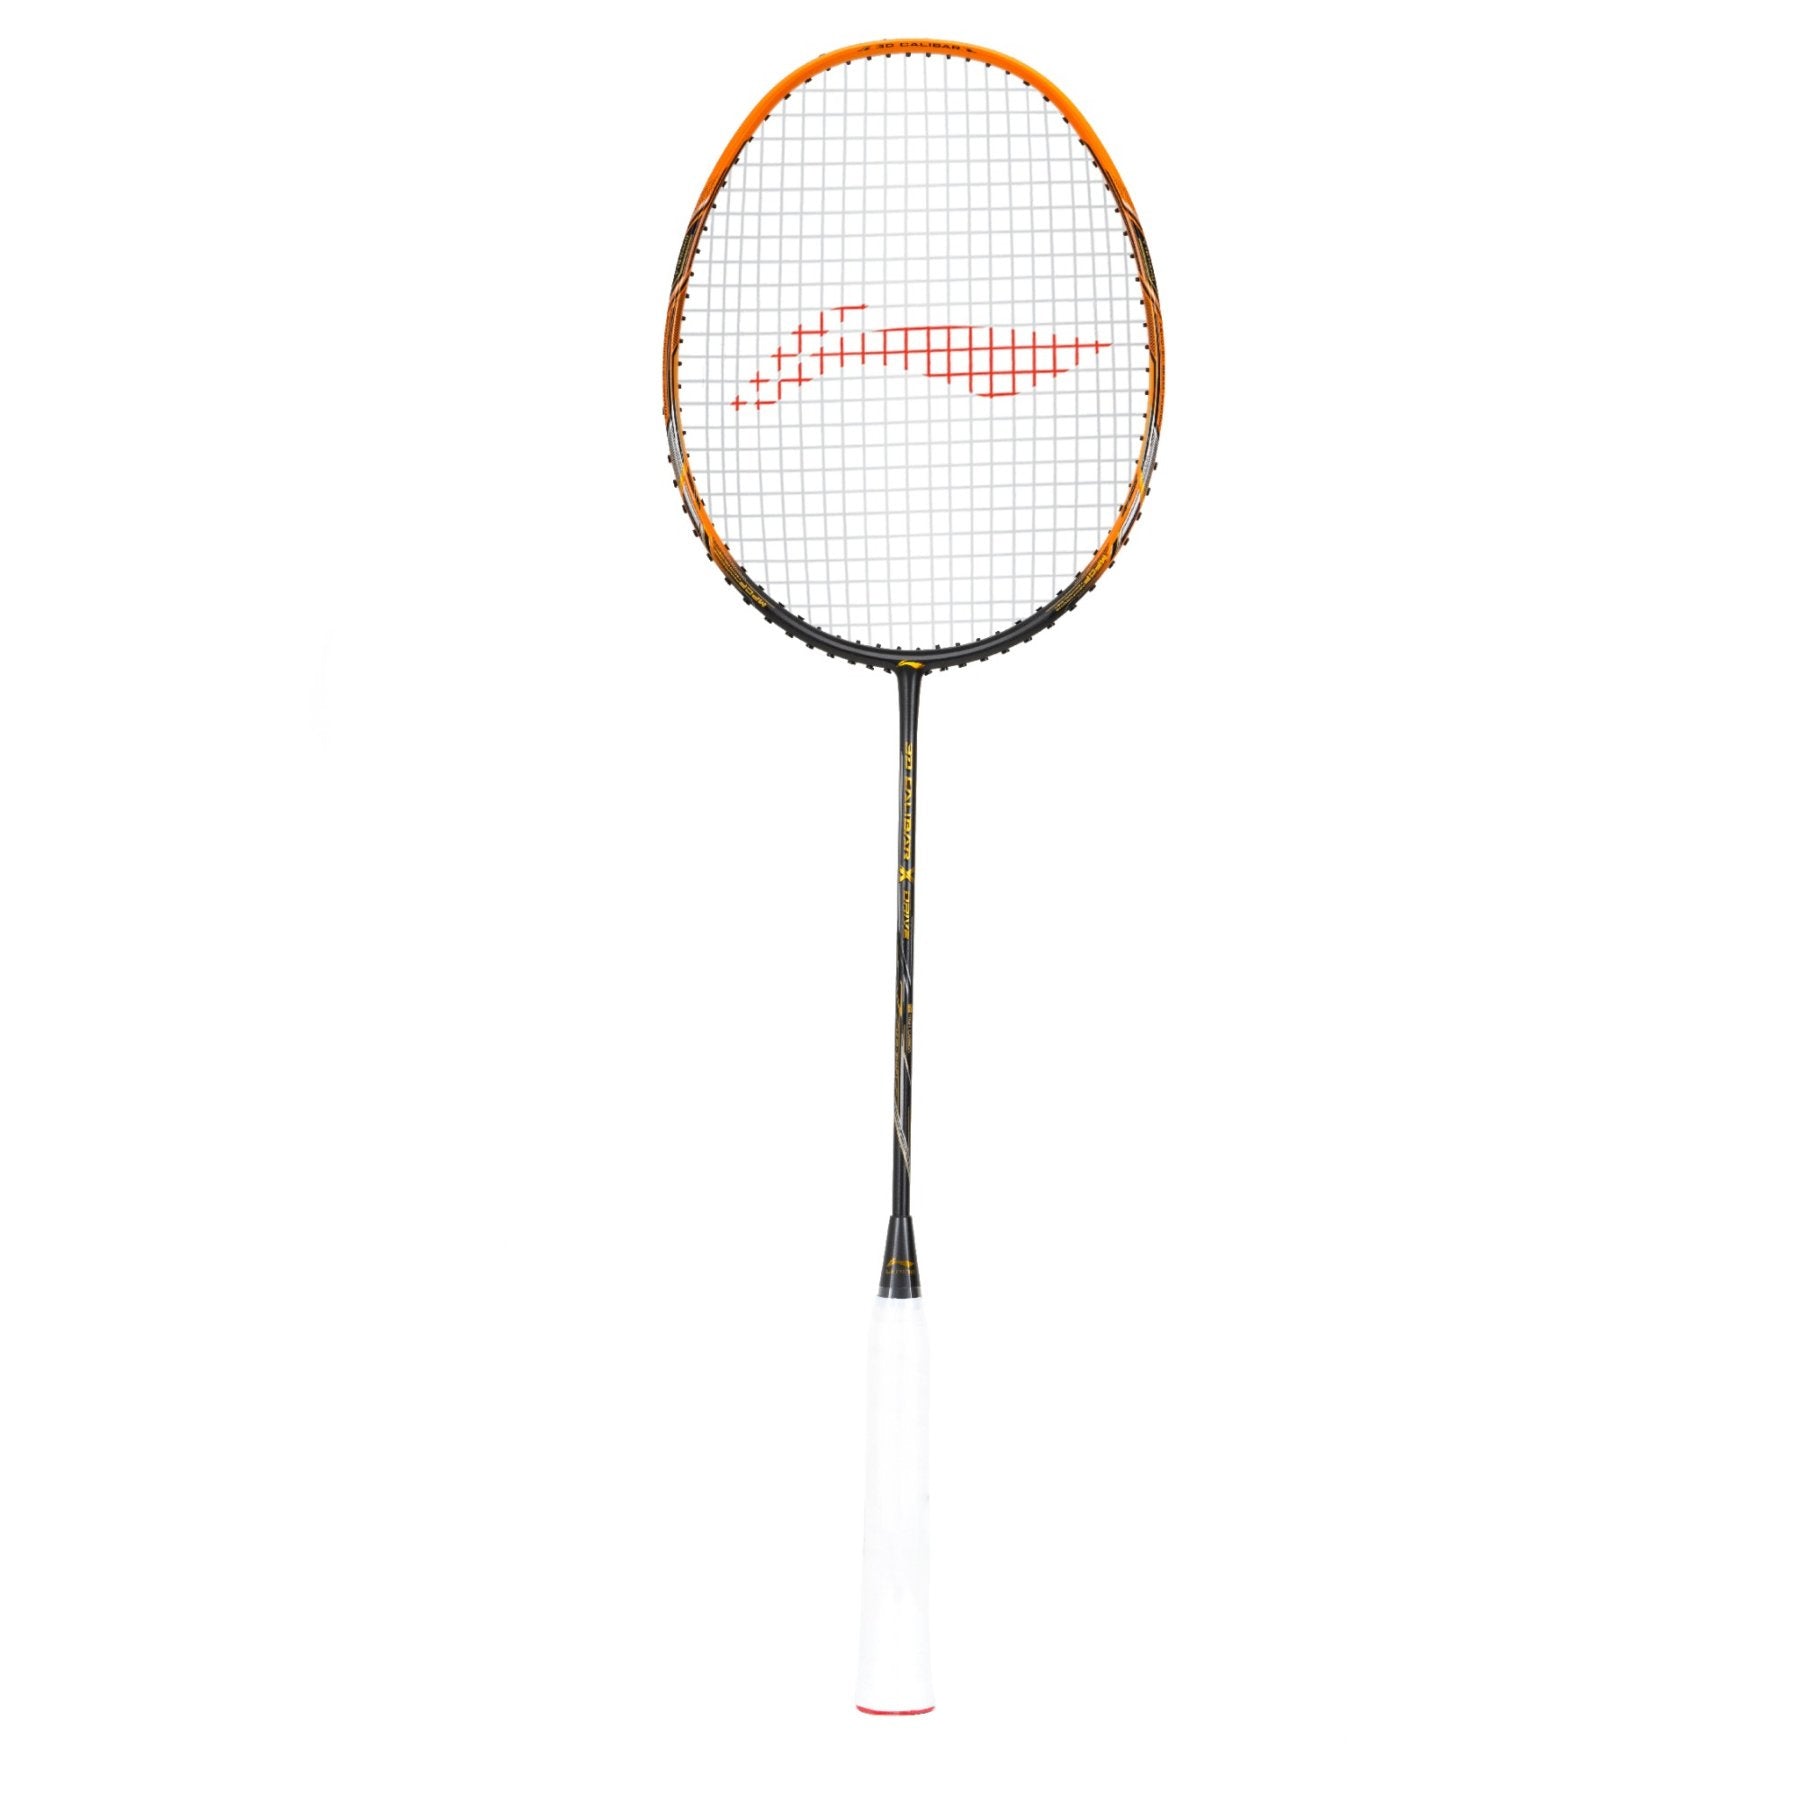 Li-Ning 3D Calibar X Drive Badminton Racquet - Black/Gold - Best Price online Prokicksports.com